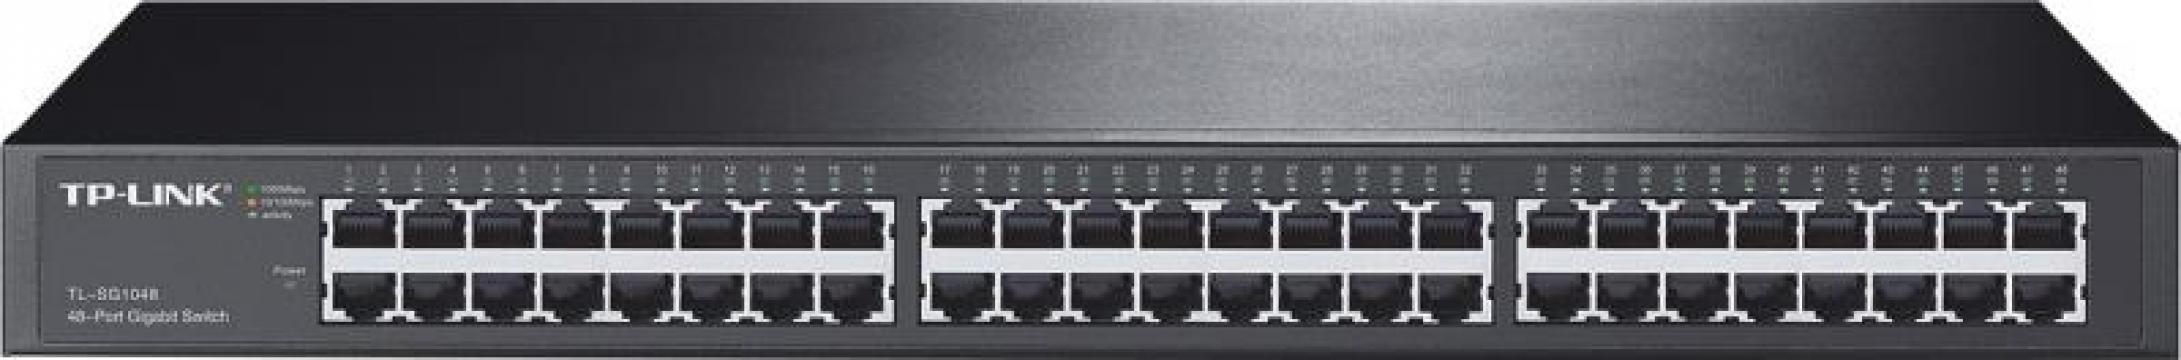 Switch TP-Link TL-SG1048, 48 porturi Gigabit, 96Gbps